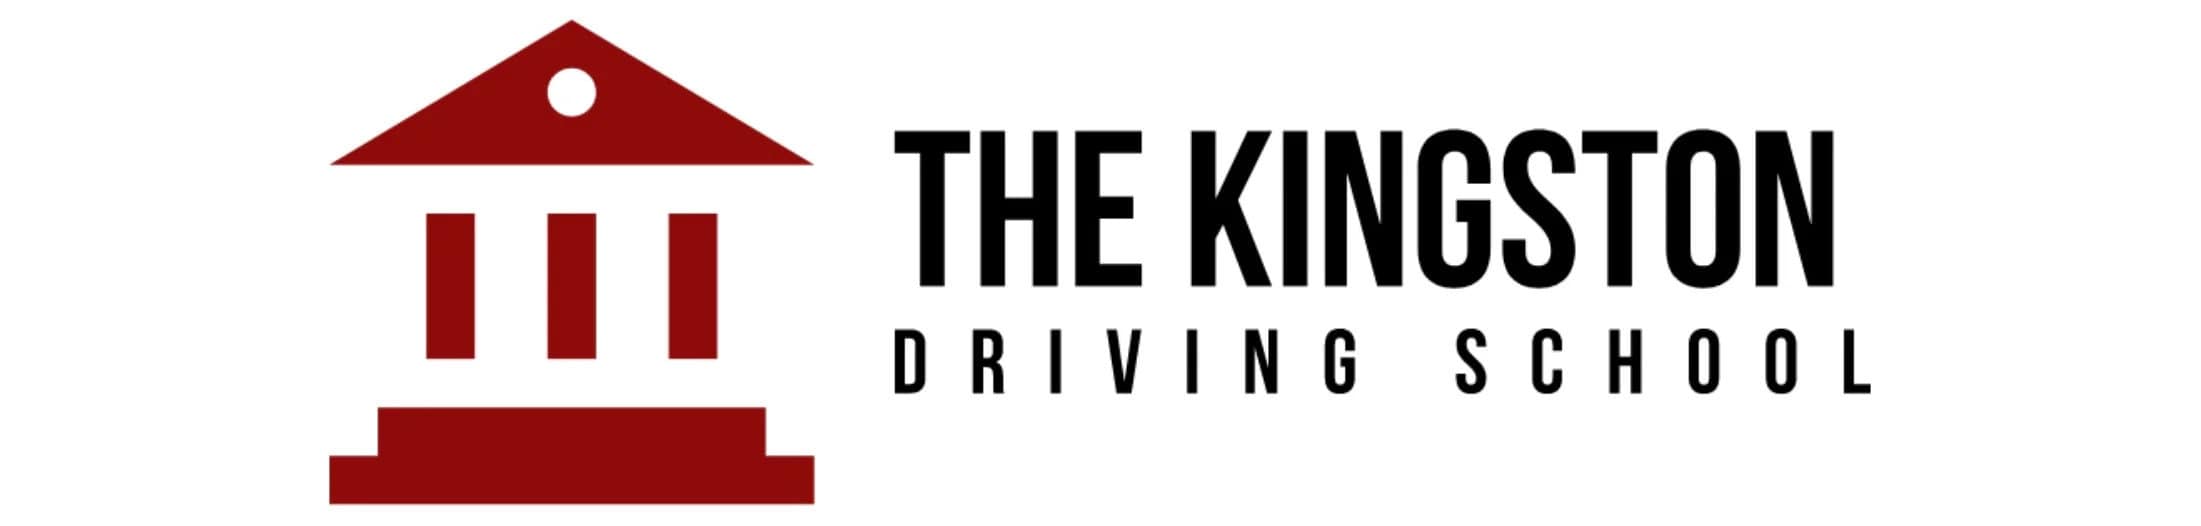 The Kingston Driving School Logo